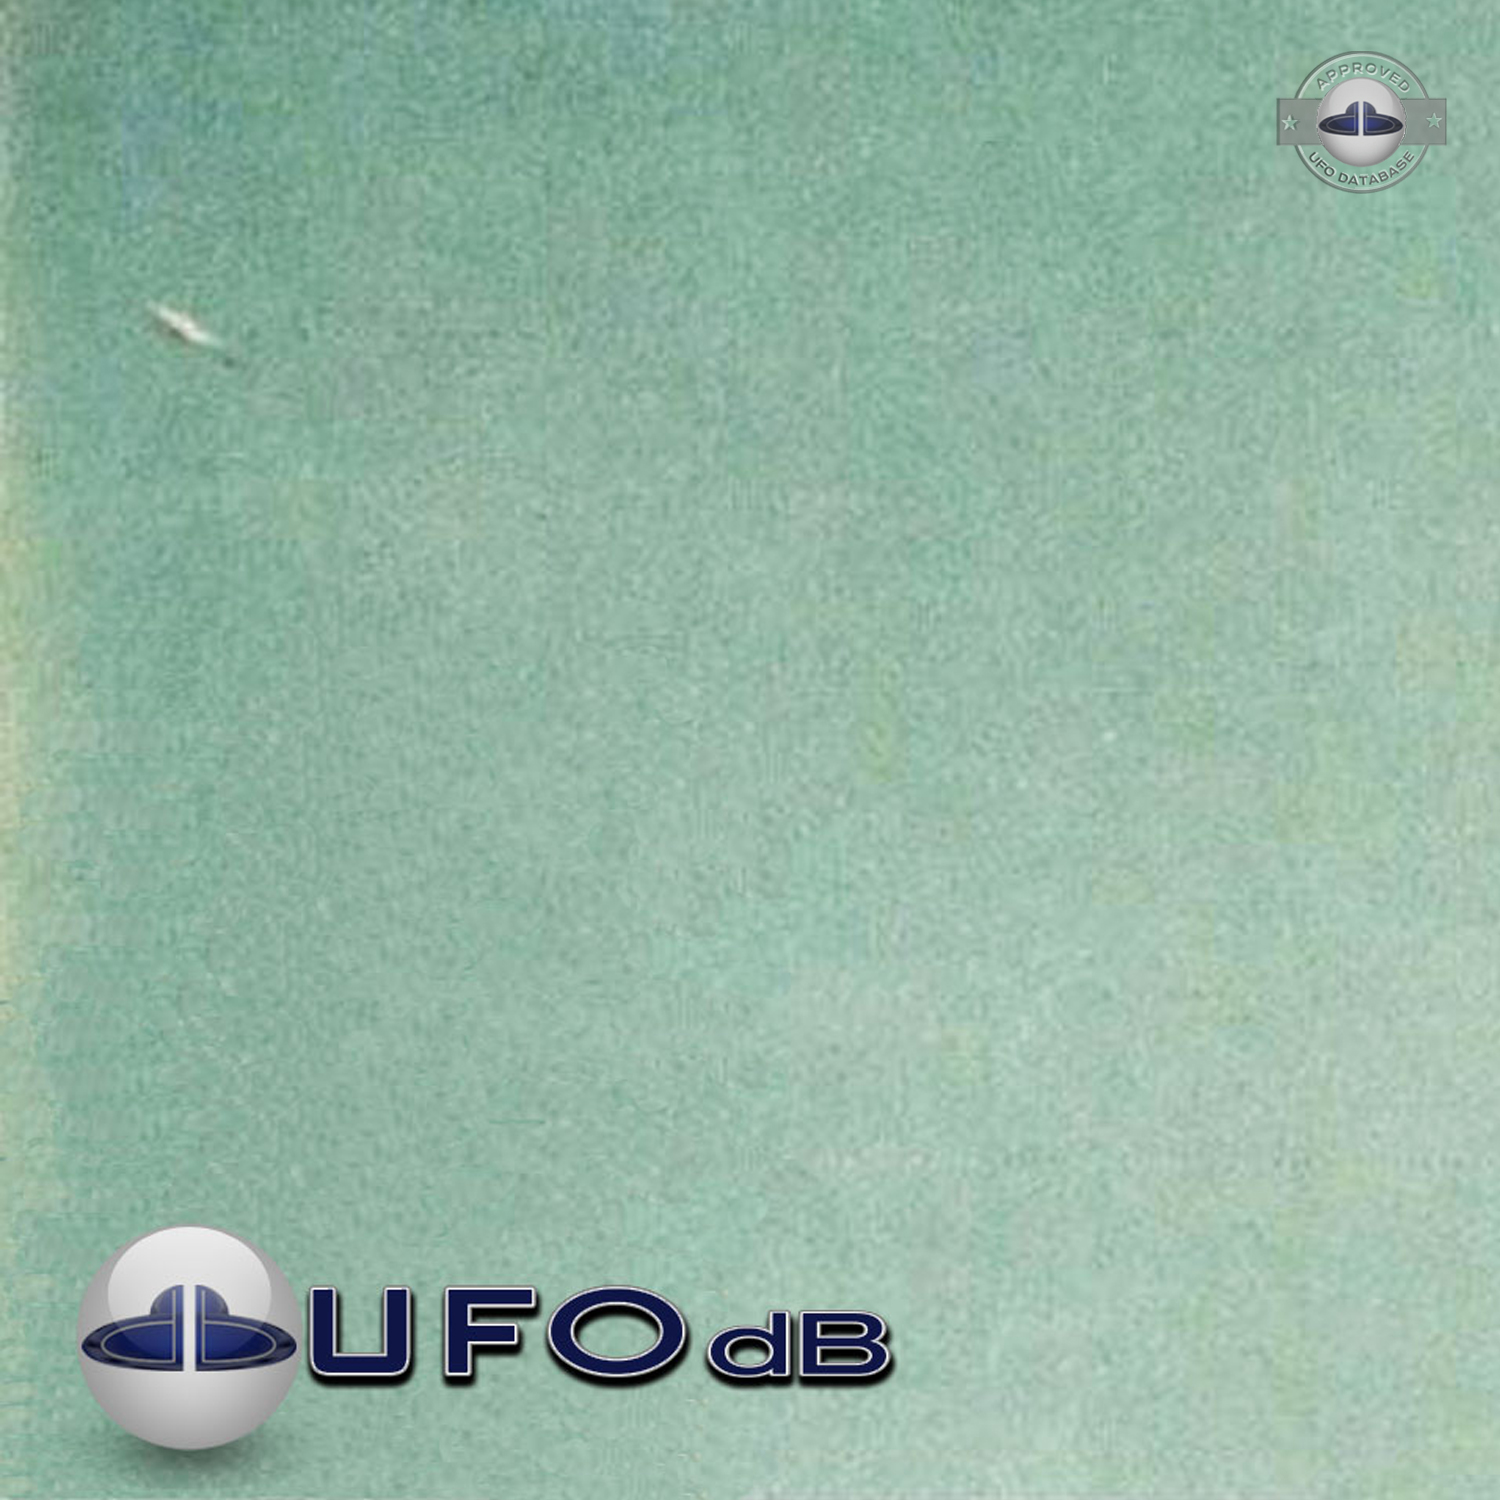 UFO chasing a F-4 Phantom II Jet fighter | Keltern, Germany | 1979 UFO Picture #163-2